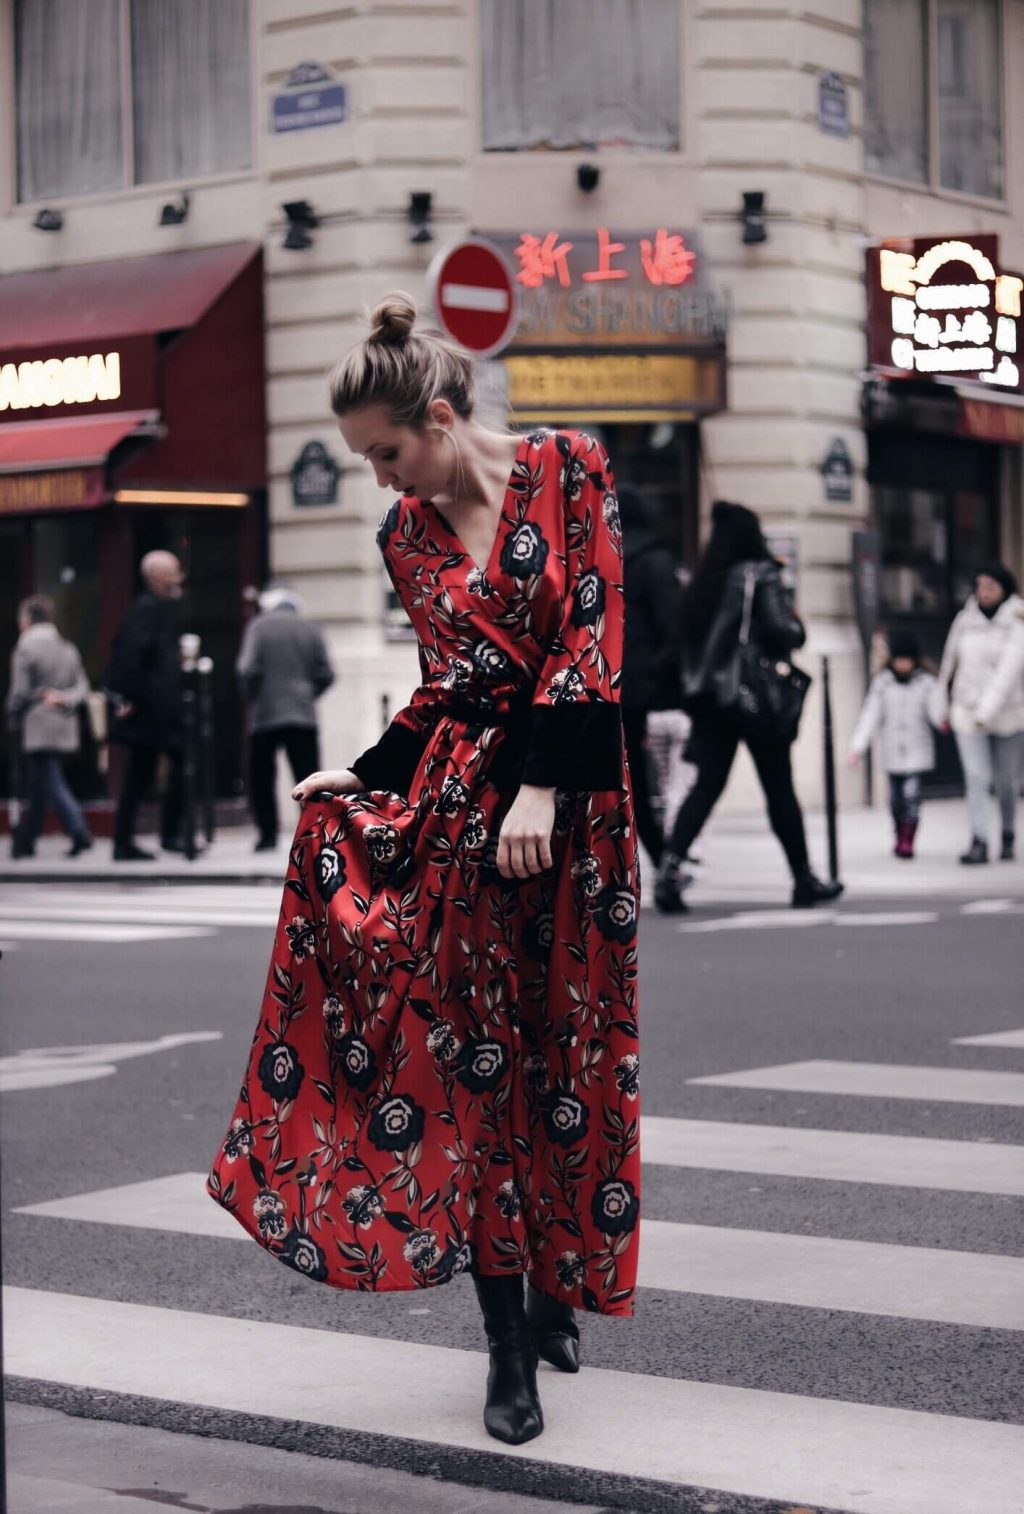 How to wear a kimono dress